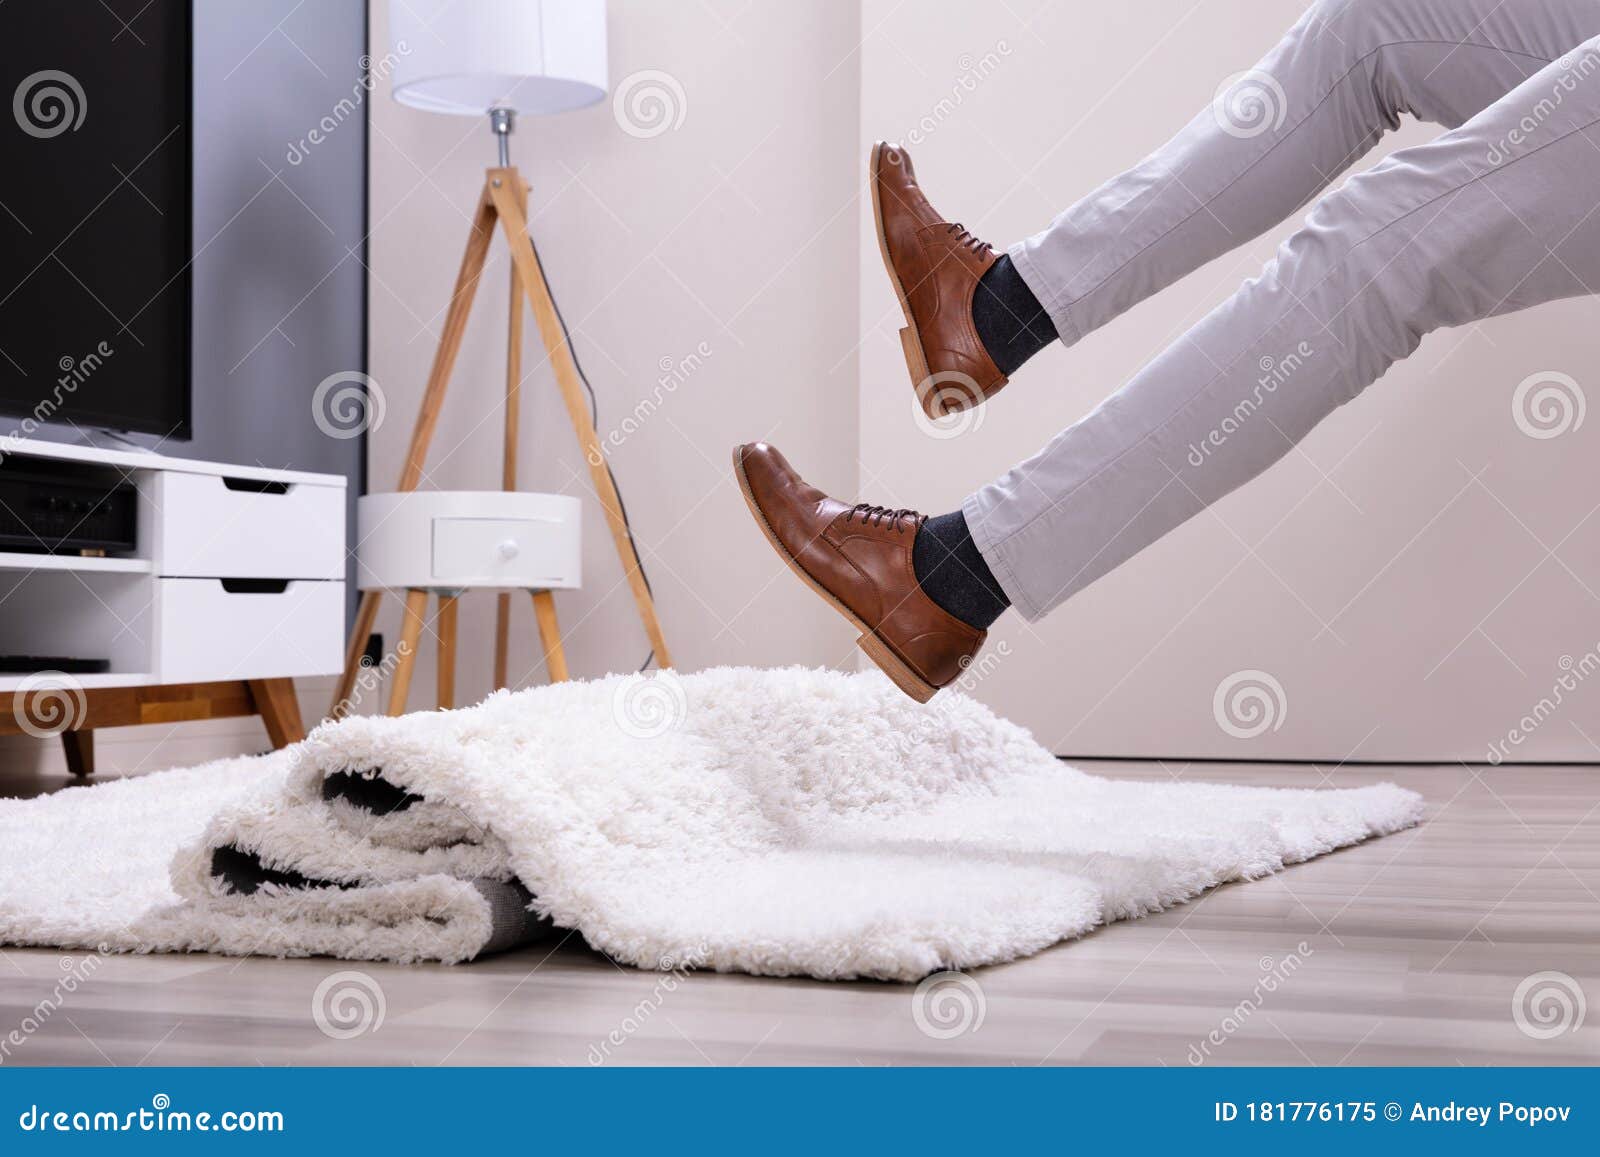 man legs stumbling with a carpet